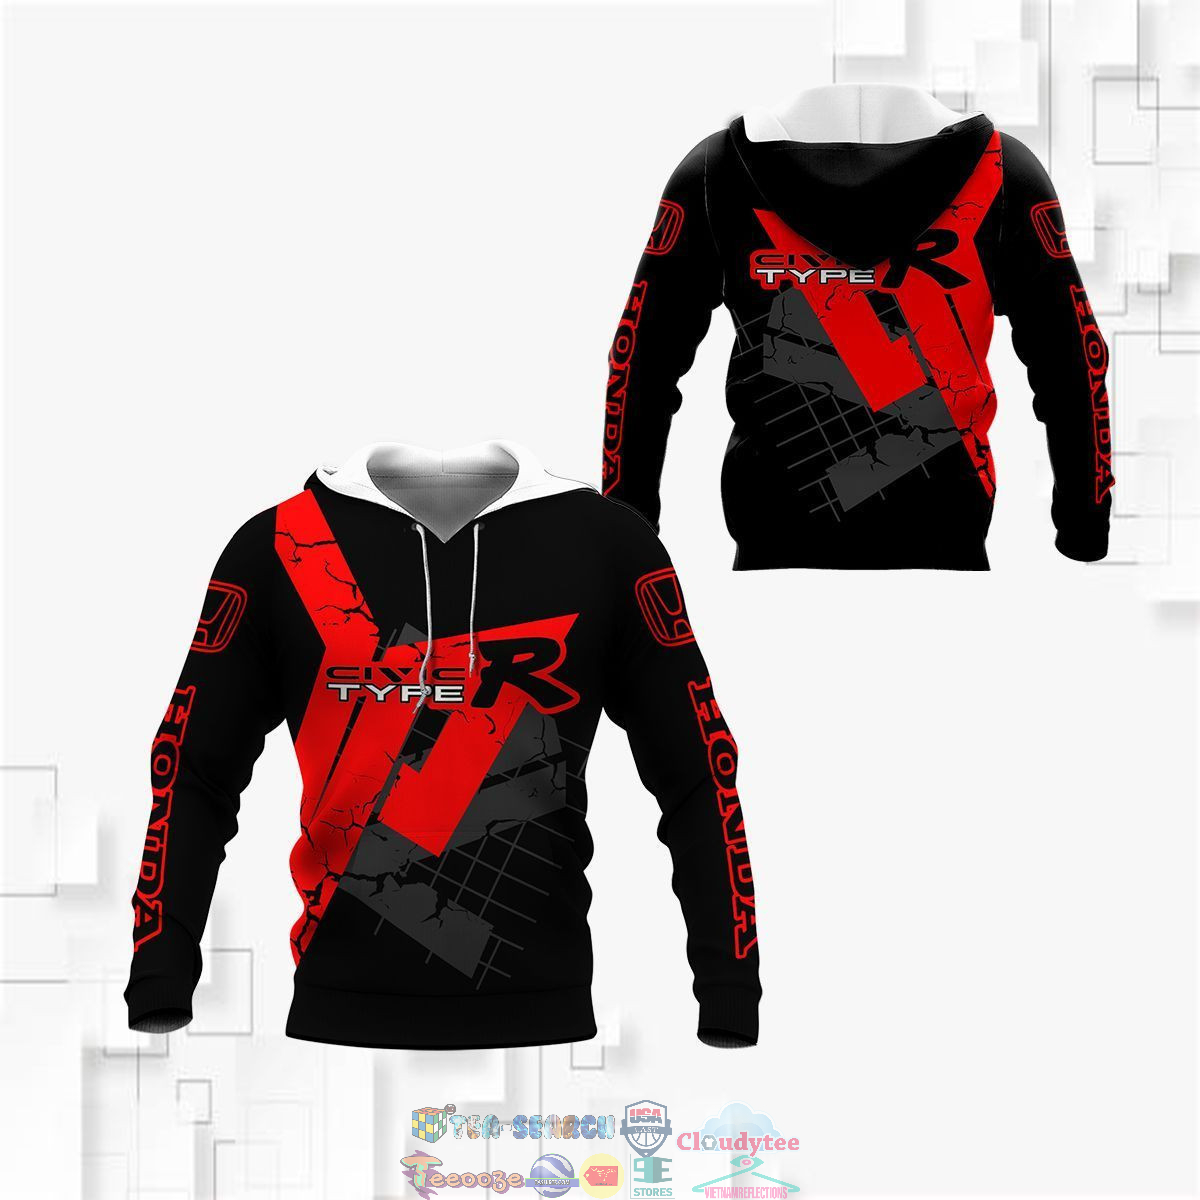 Honda Civic Type R ver 14 3D hoodie and t-shirt – Saleoff